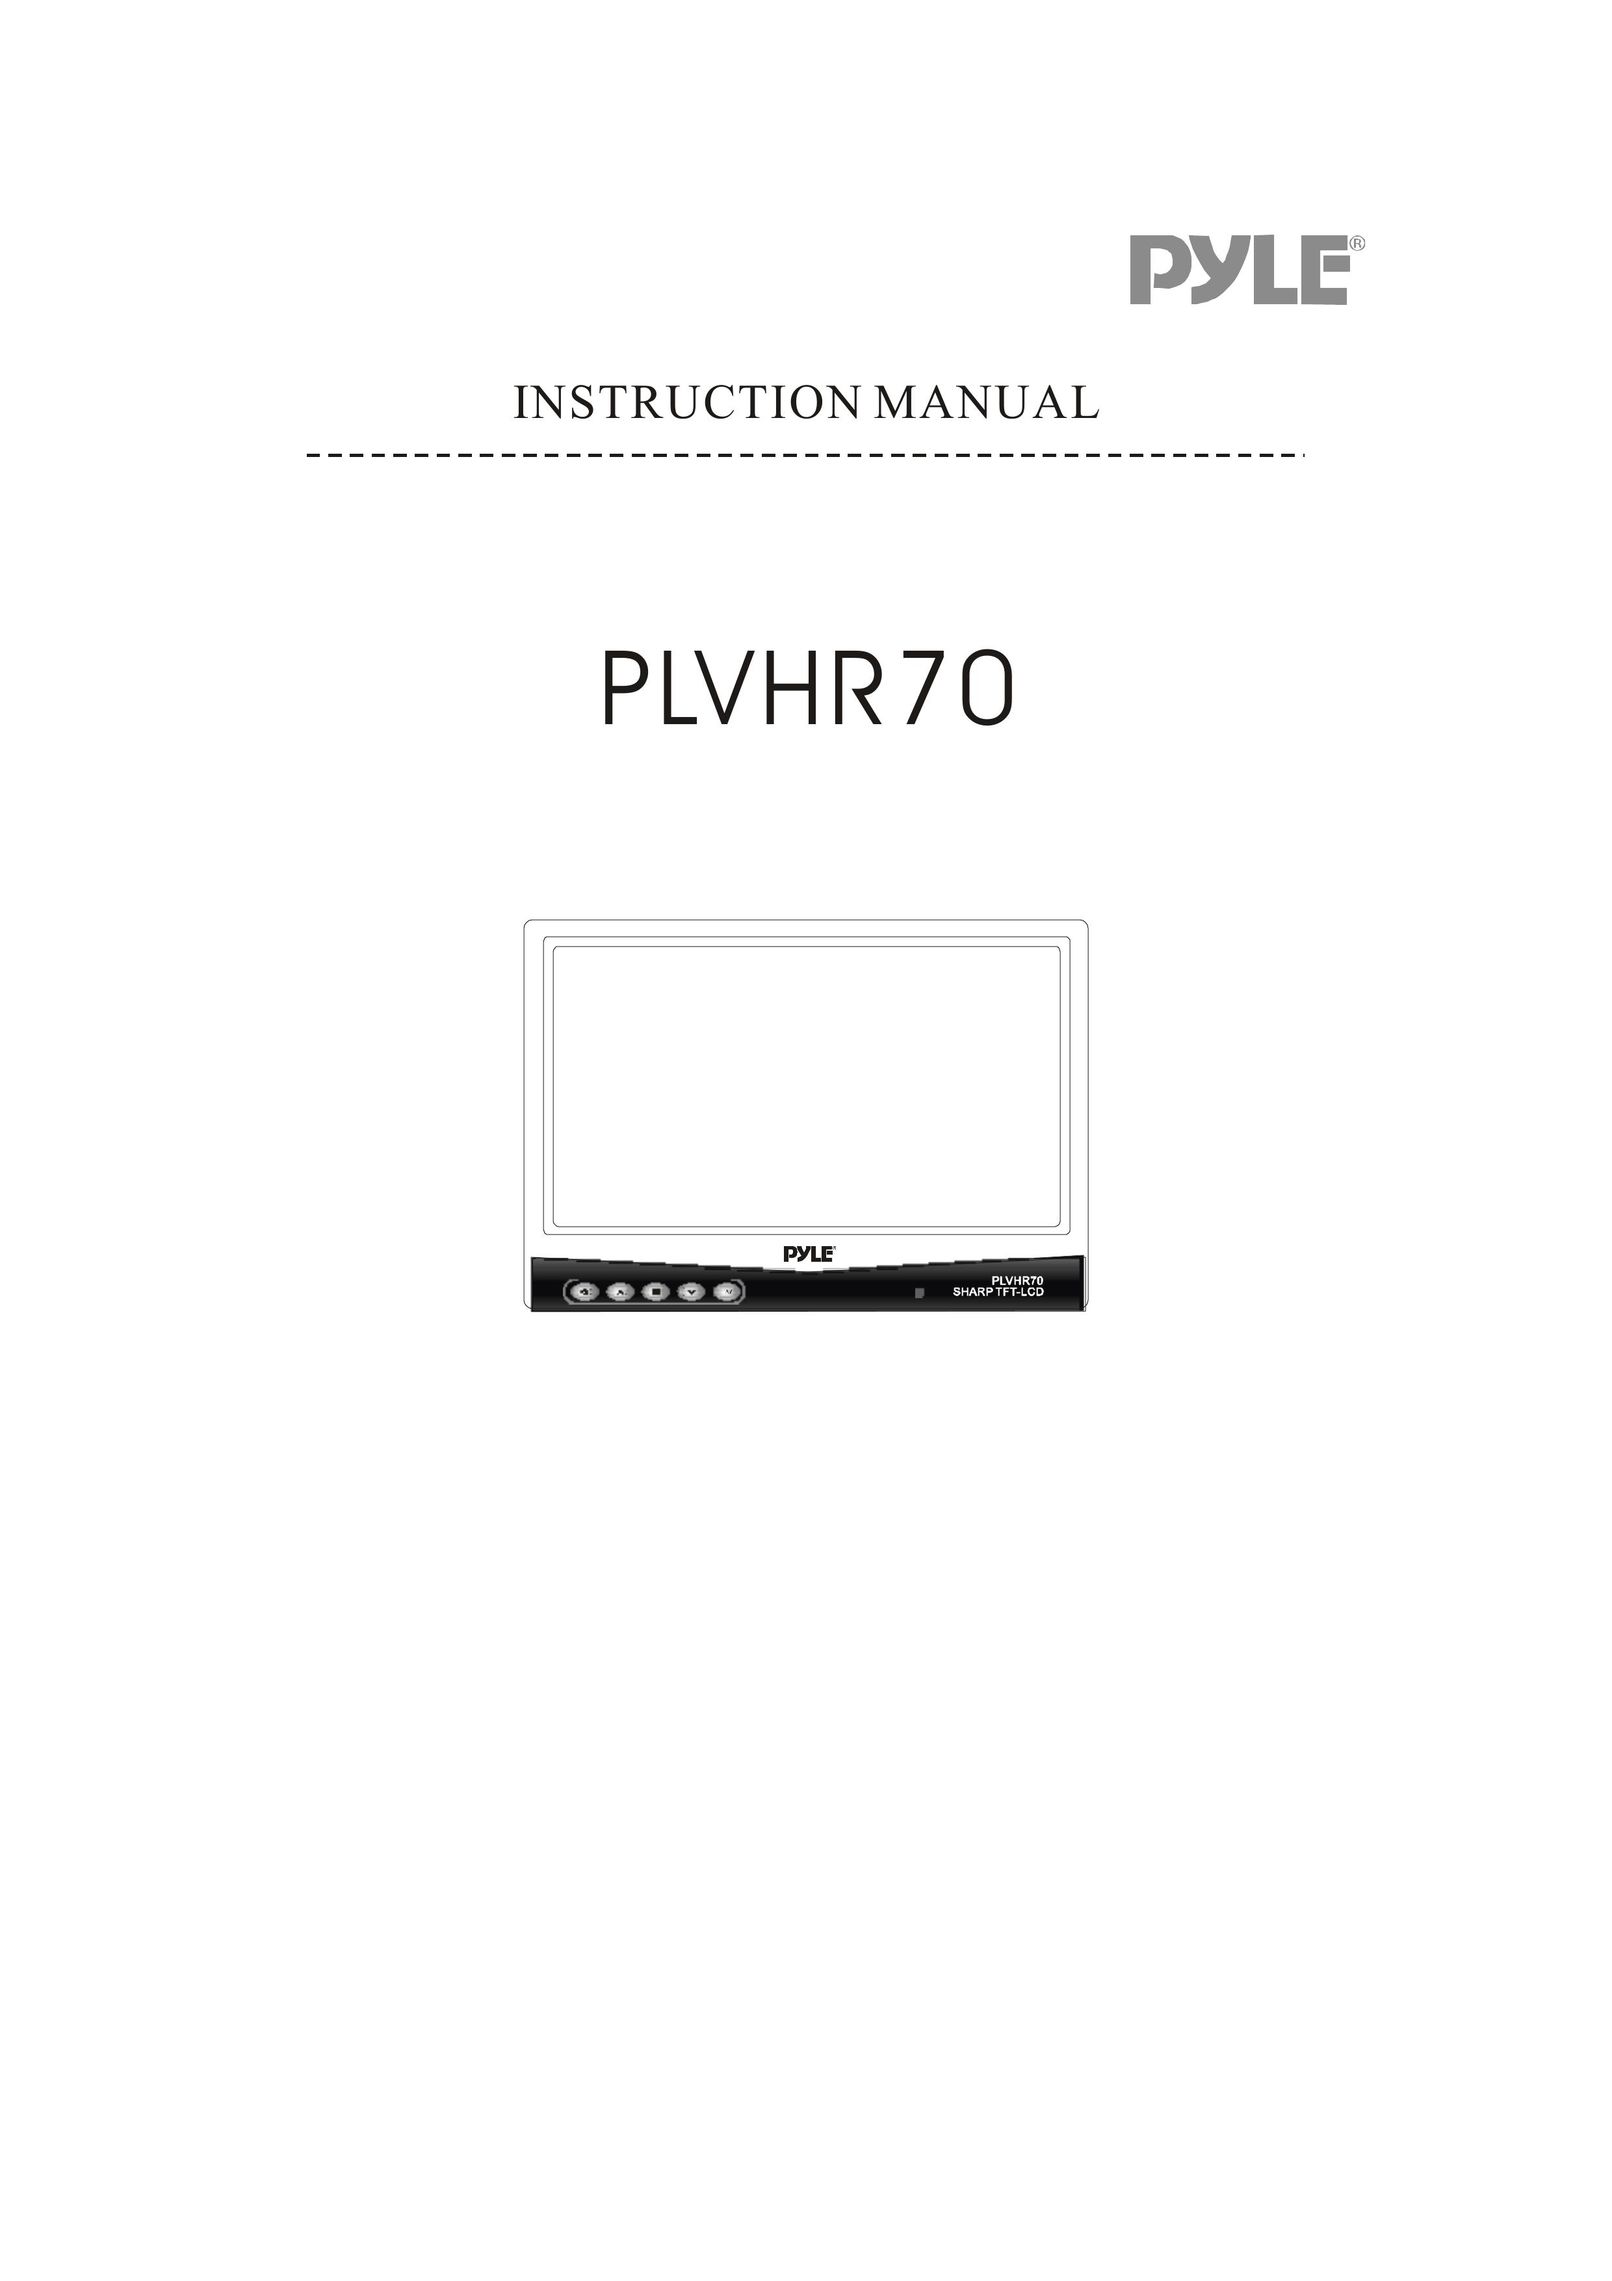 Radio Shack PLVHR70 Baby Monitor User Manual